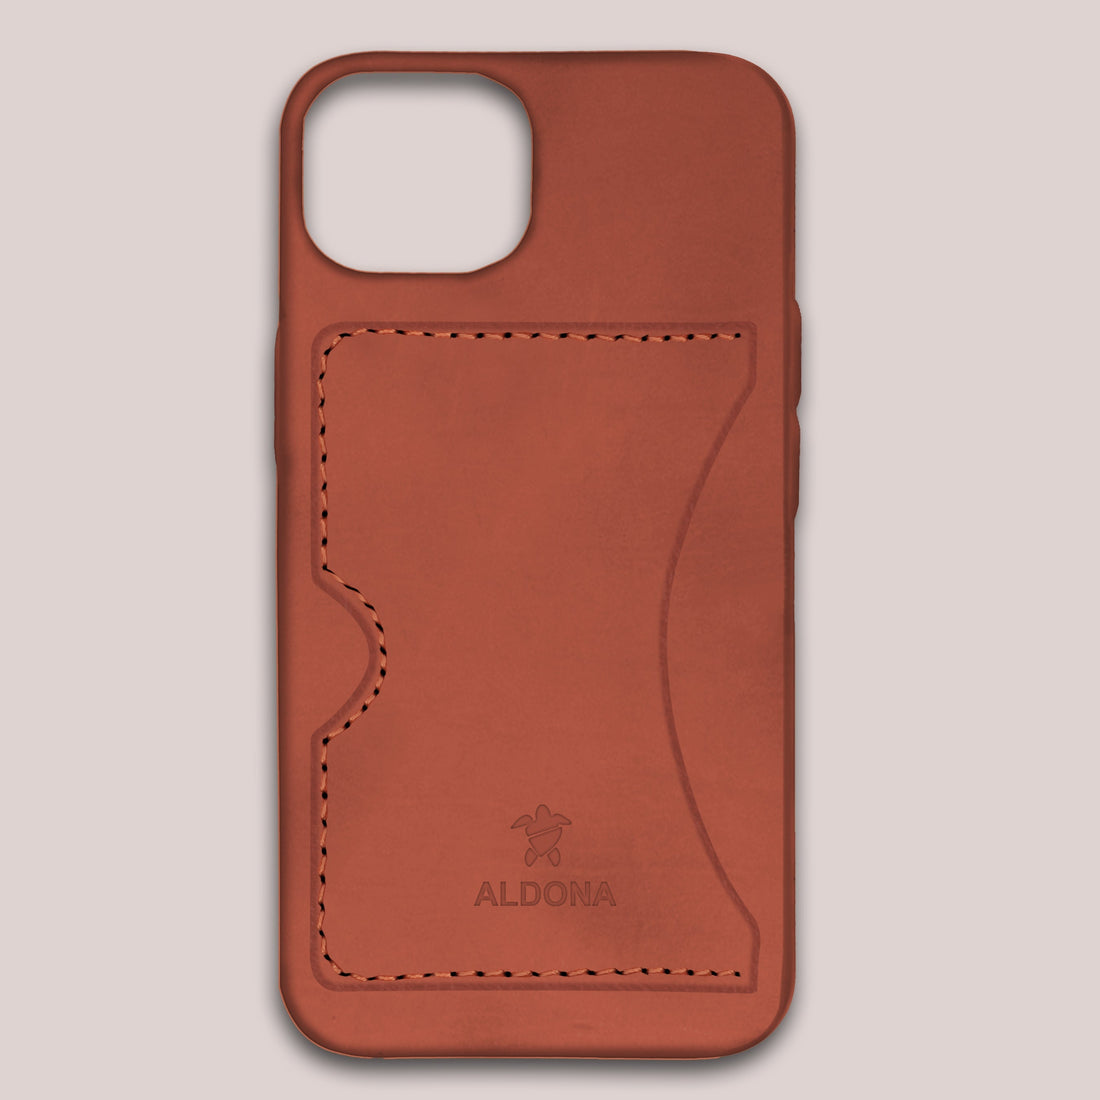 Baxter Card Case for iPhone 12 Mini - Cognac